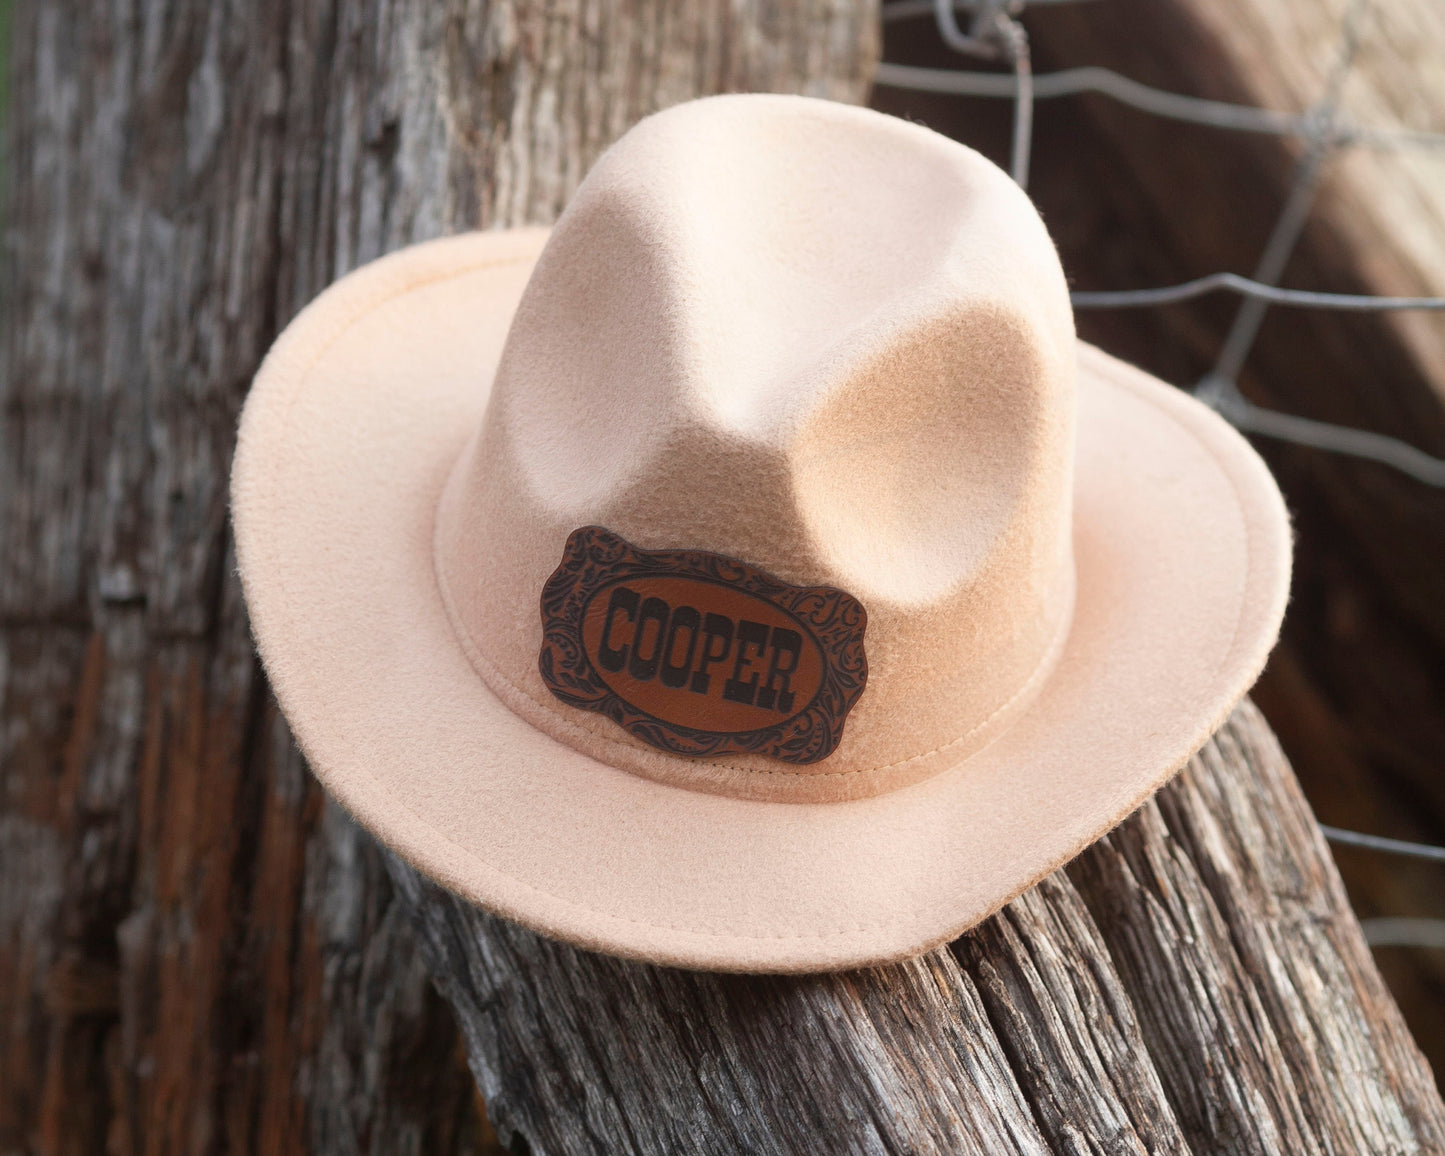 Cowboy Ranch Hat for kids, Kids cowboy hat, kids cowboy costume, leather patch hat, cow ranch design, western kids